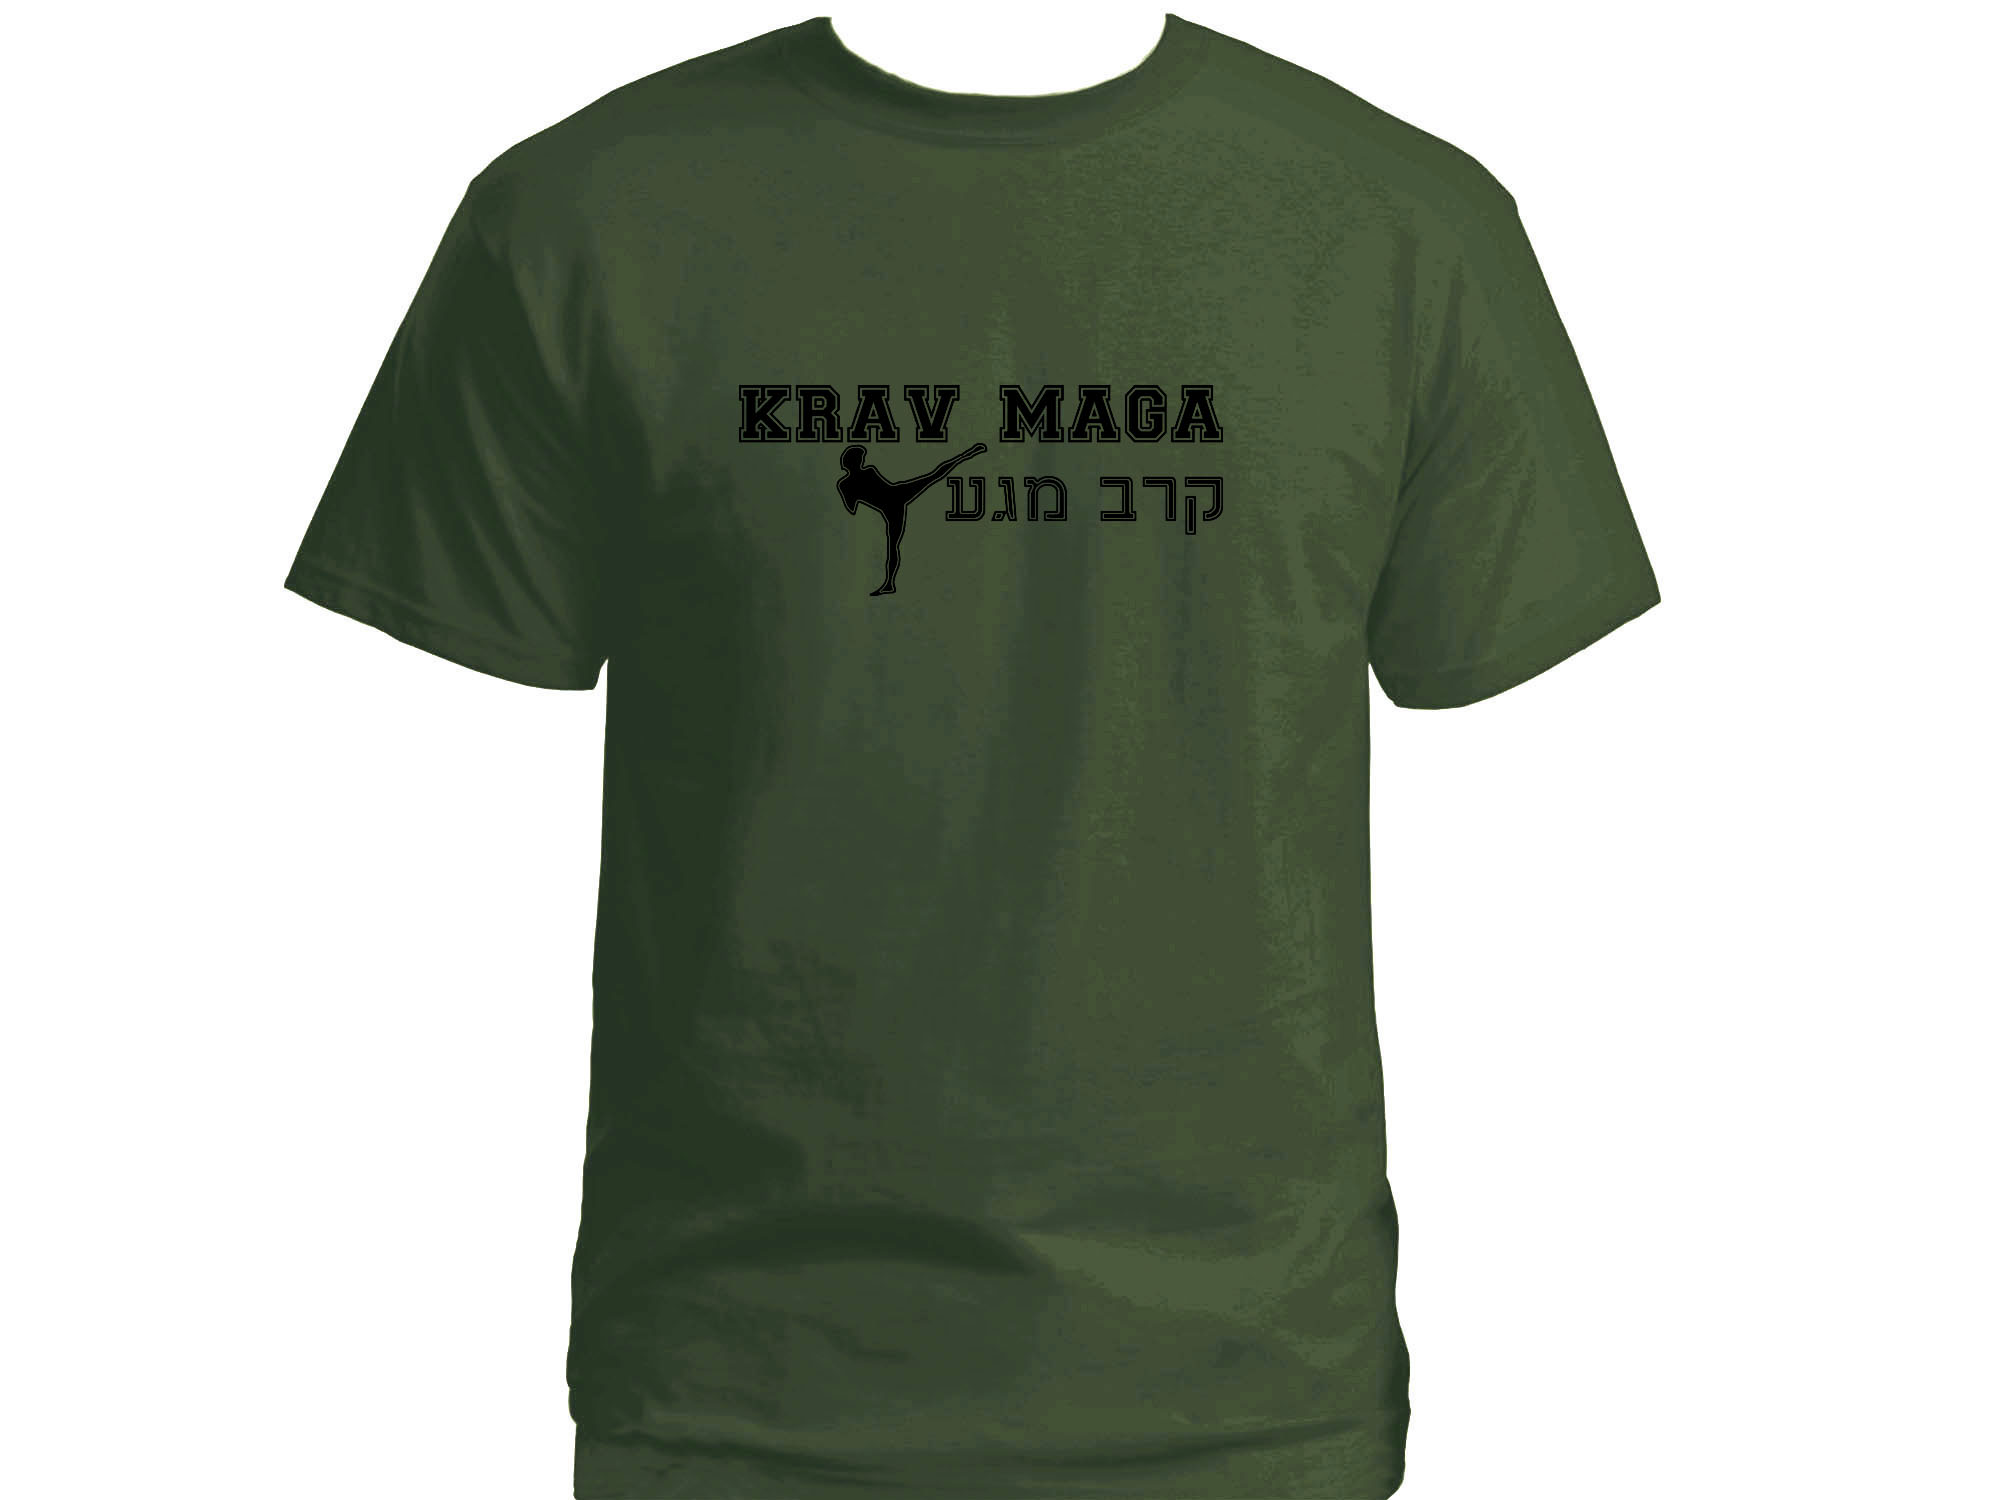 Krav maga silk printed customized t-shirt 7